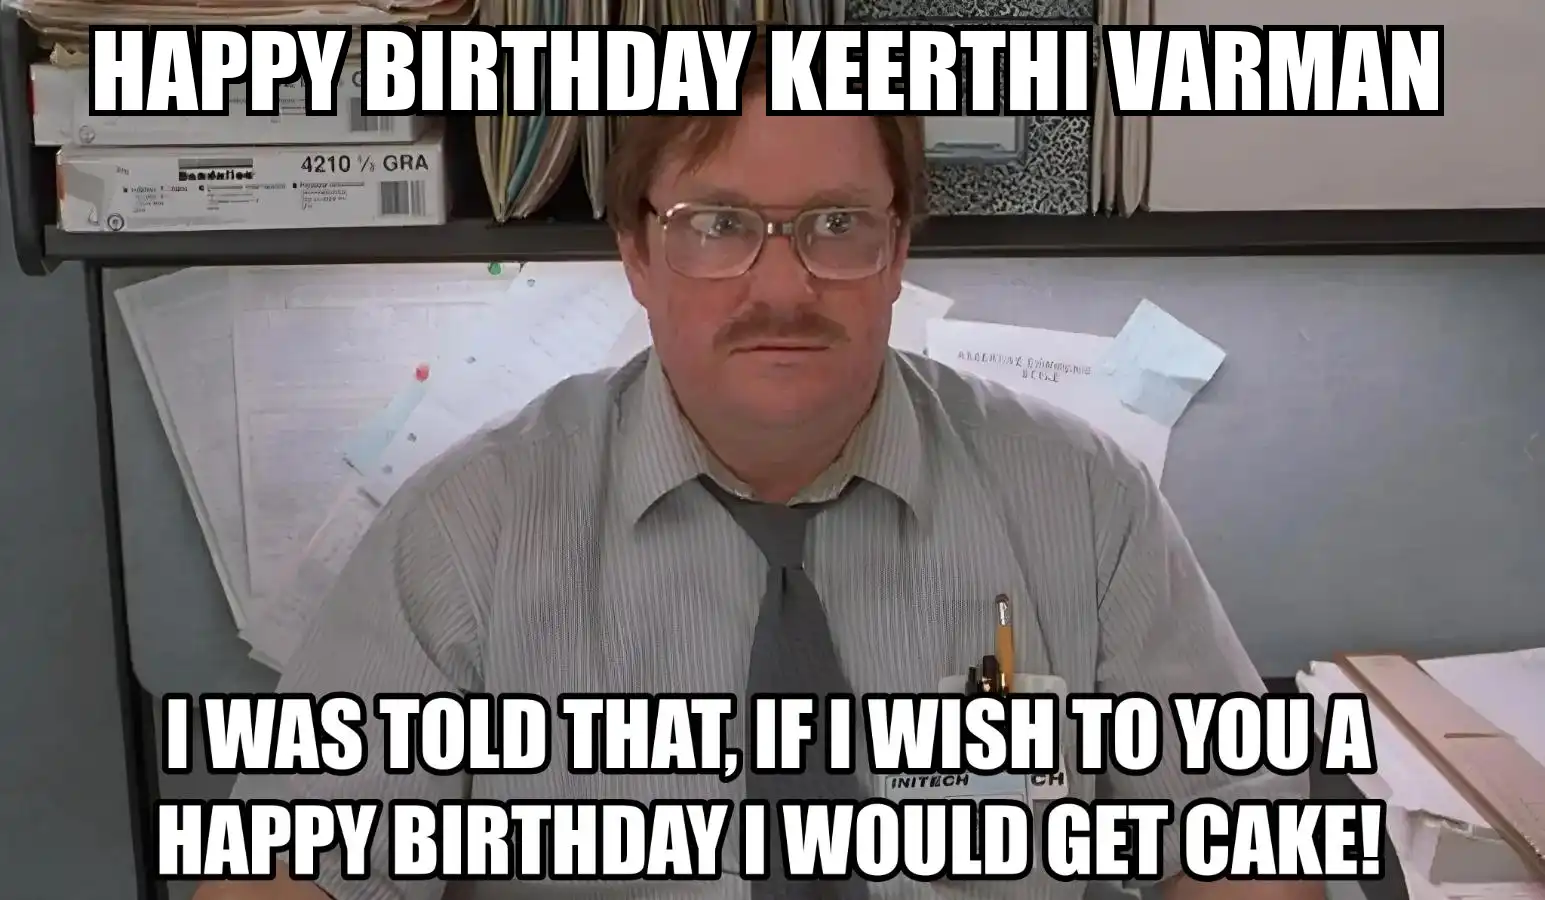 Happy Birthday Keerthi varman I Would Get A Cake Meme